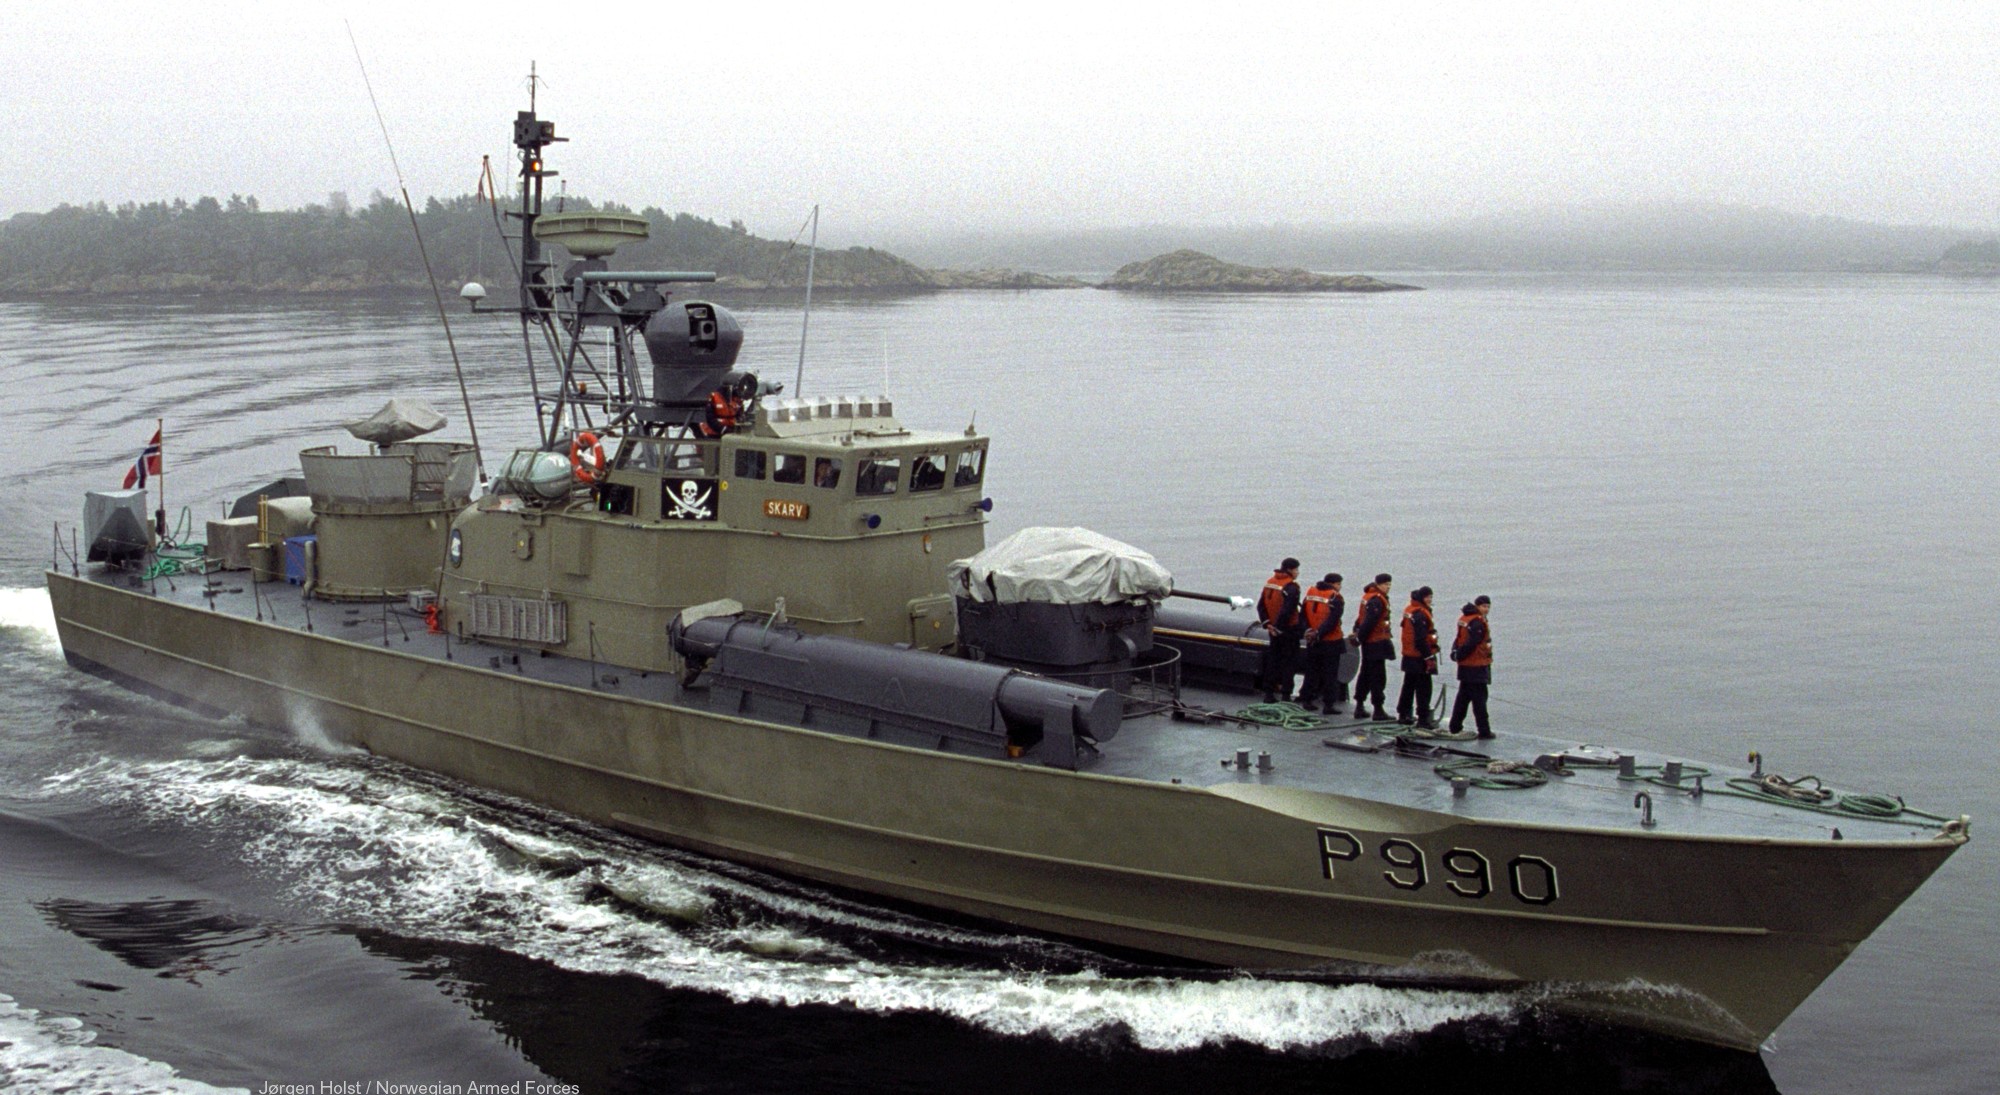 p-990 knm skarv hauk class fast attack missile torpedo craft boat norwegian navy sjøforsvaret 03